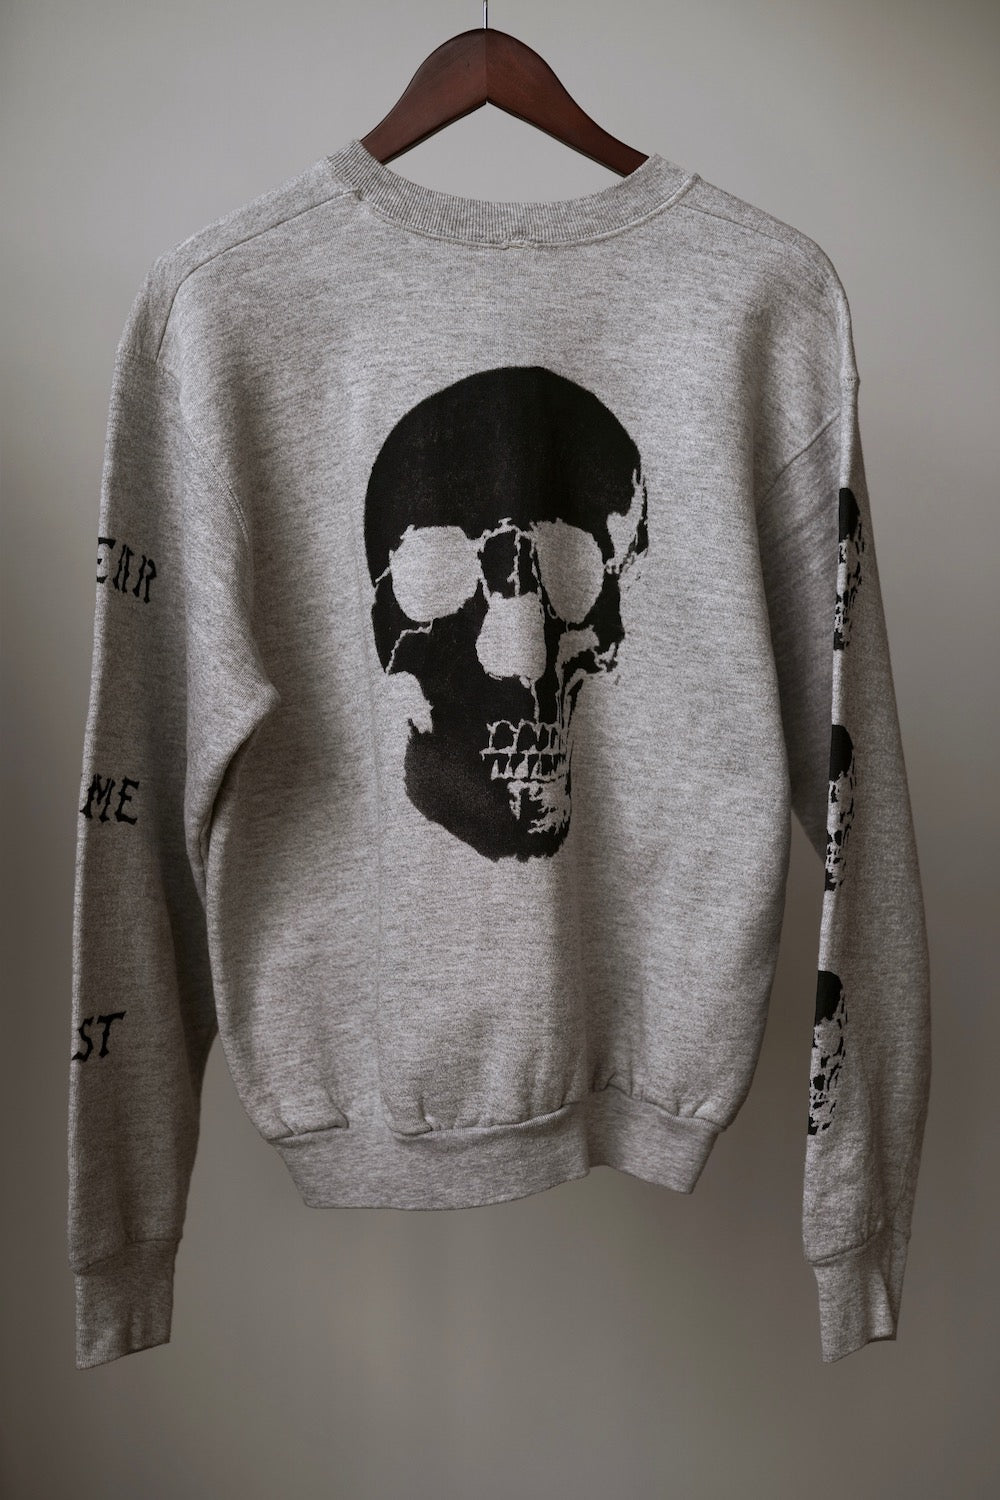 WSL Customized Vintage "Zipper Club Skullhead" Sweatshirt